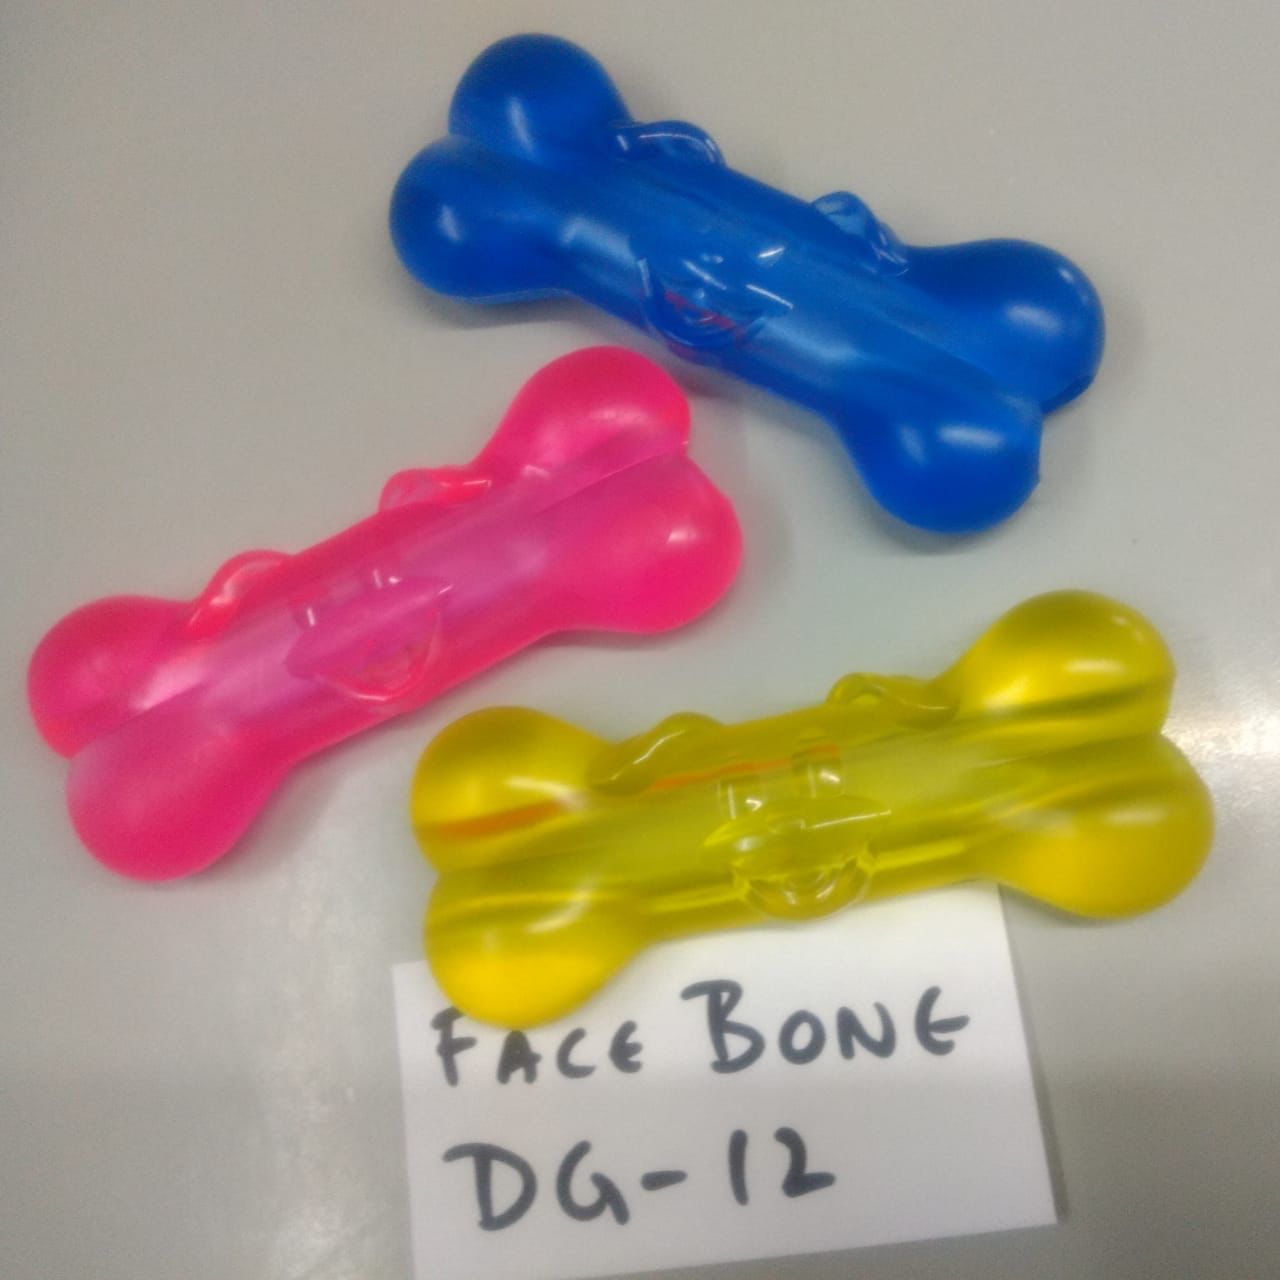 Face bone